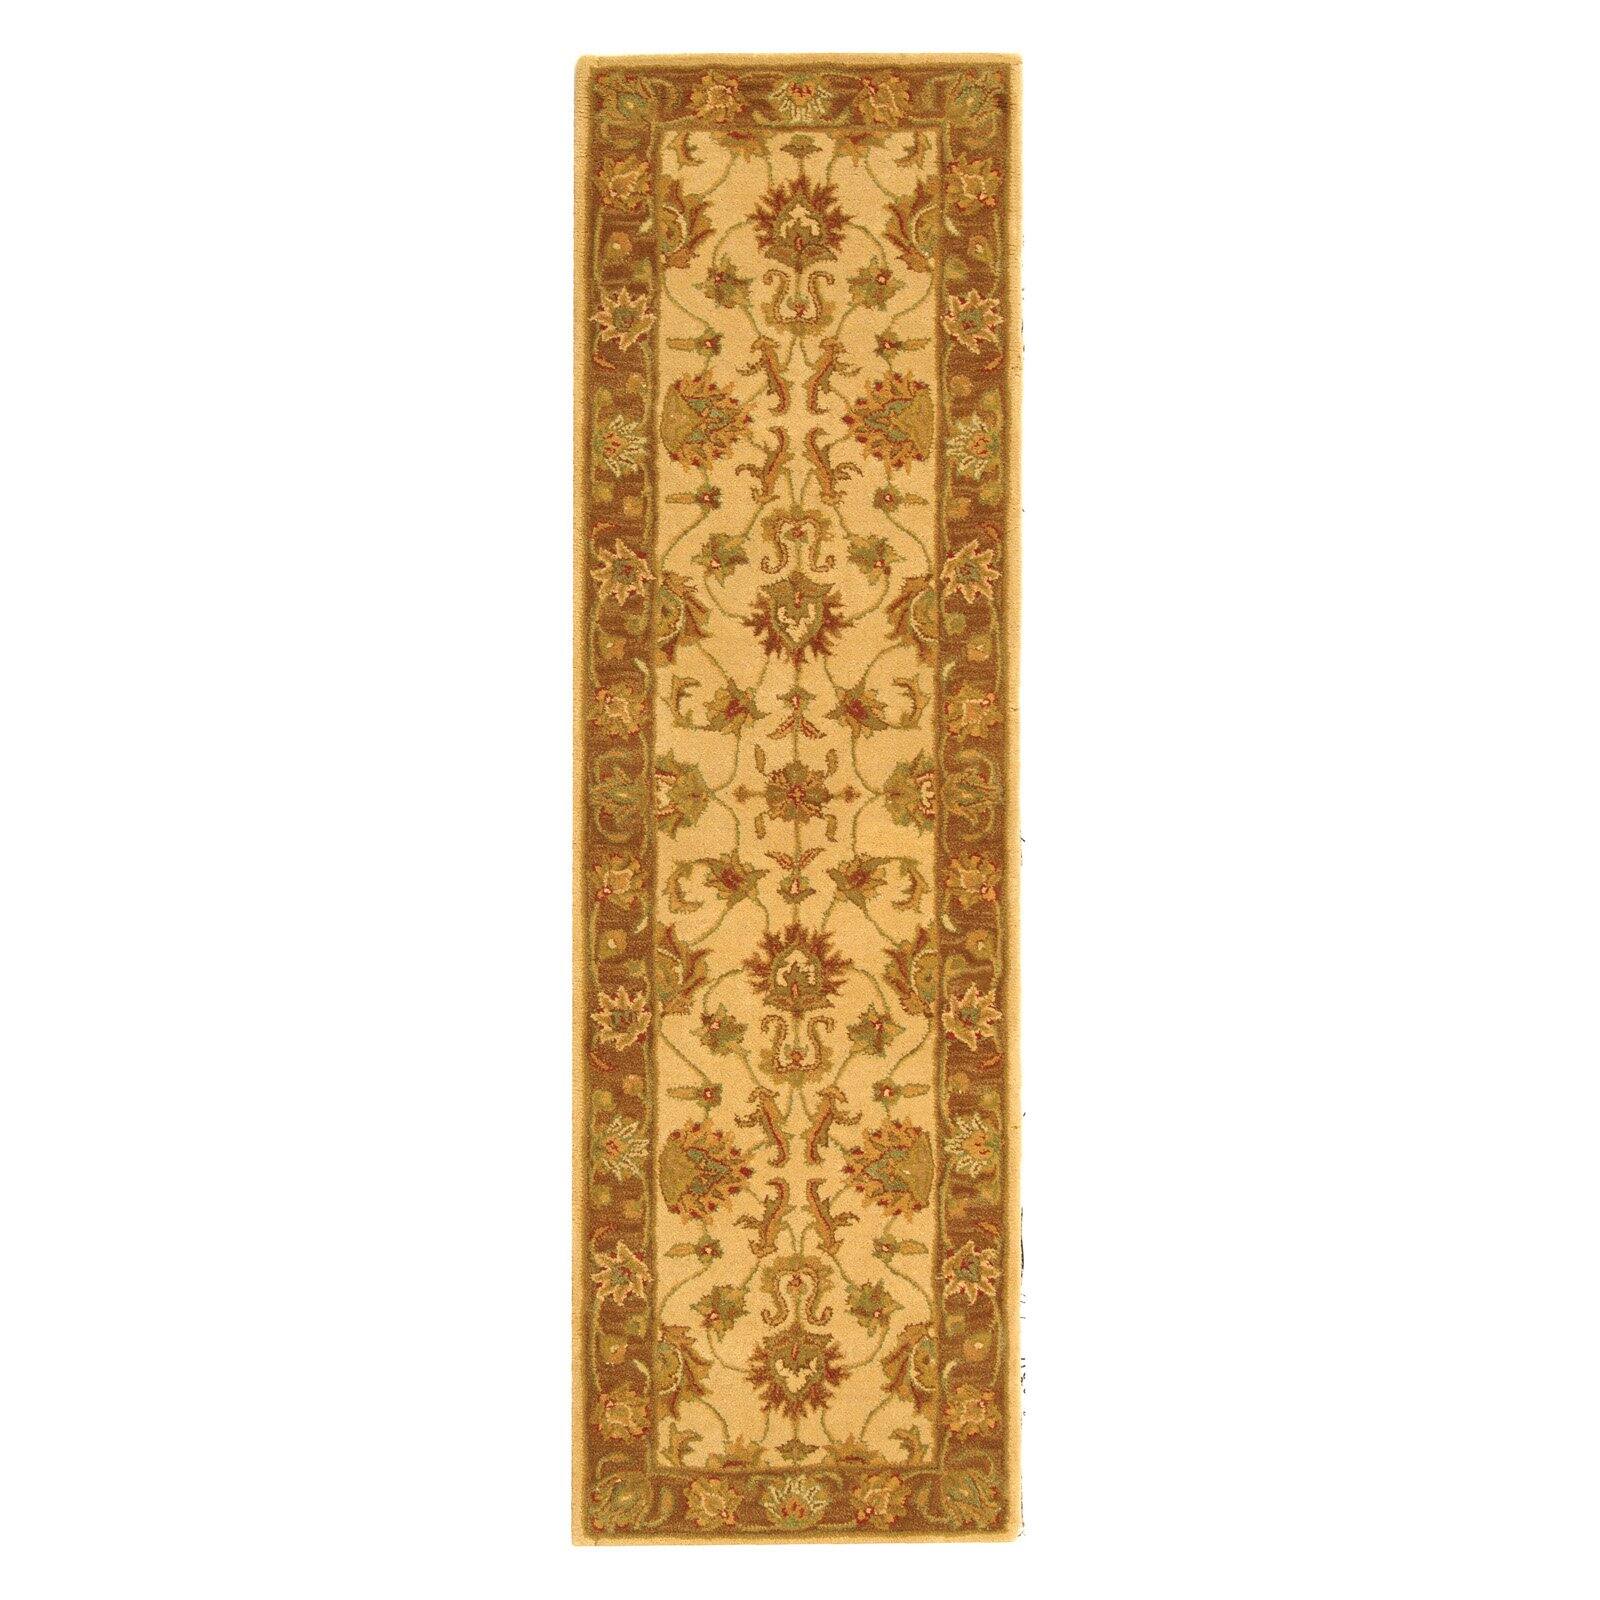 SAFAVIEH Heritage Regis Traditional Wool Area Rug, Ivory/Brown, 7'6" x 9'6" - image 4 of 9